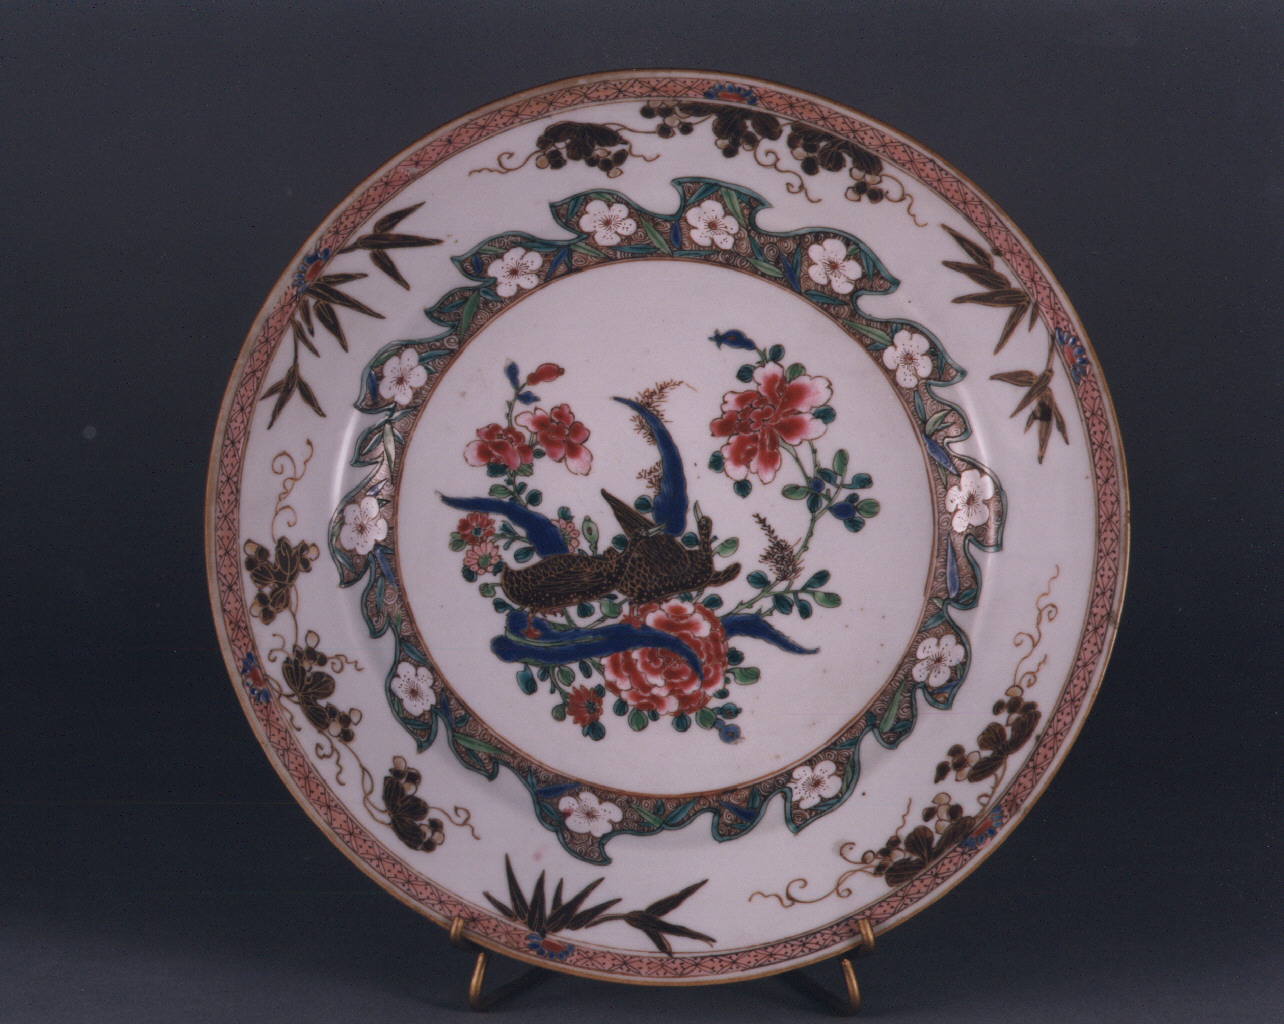 motivi decorativi vegetali e animali (piatto, serie) - manifattura cinese (sec. XVIII)